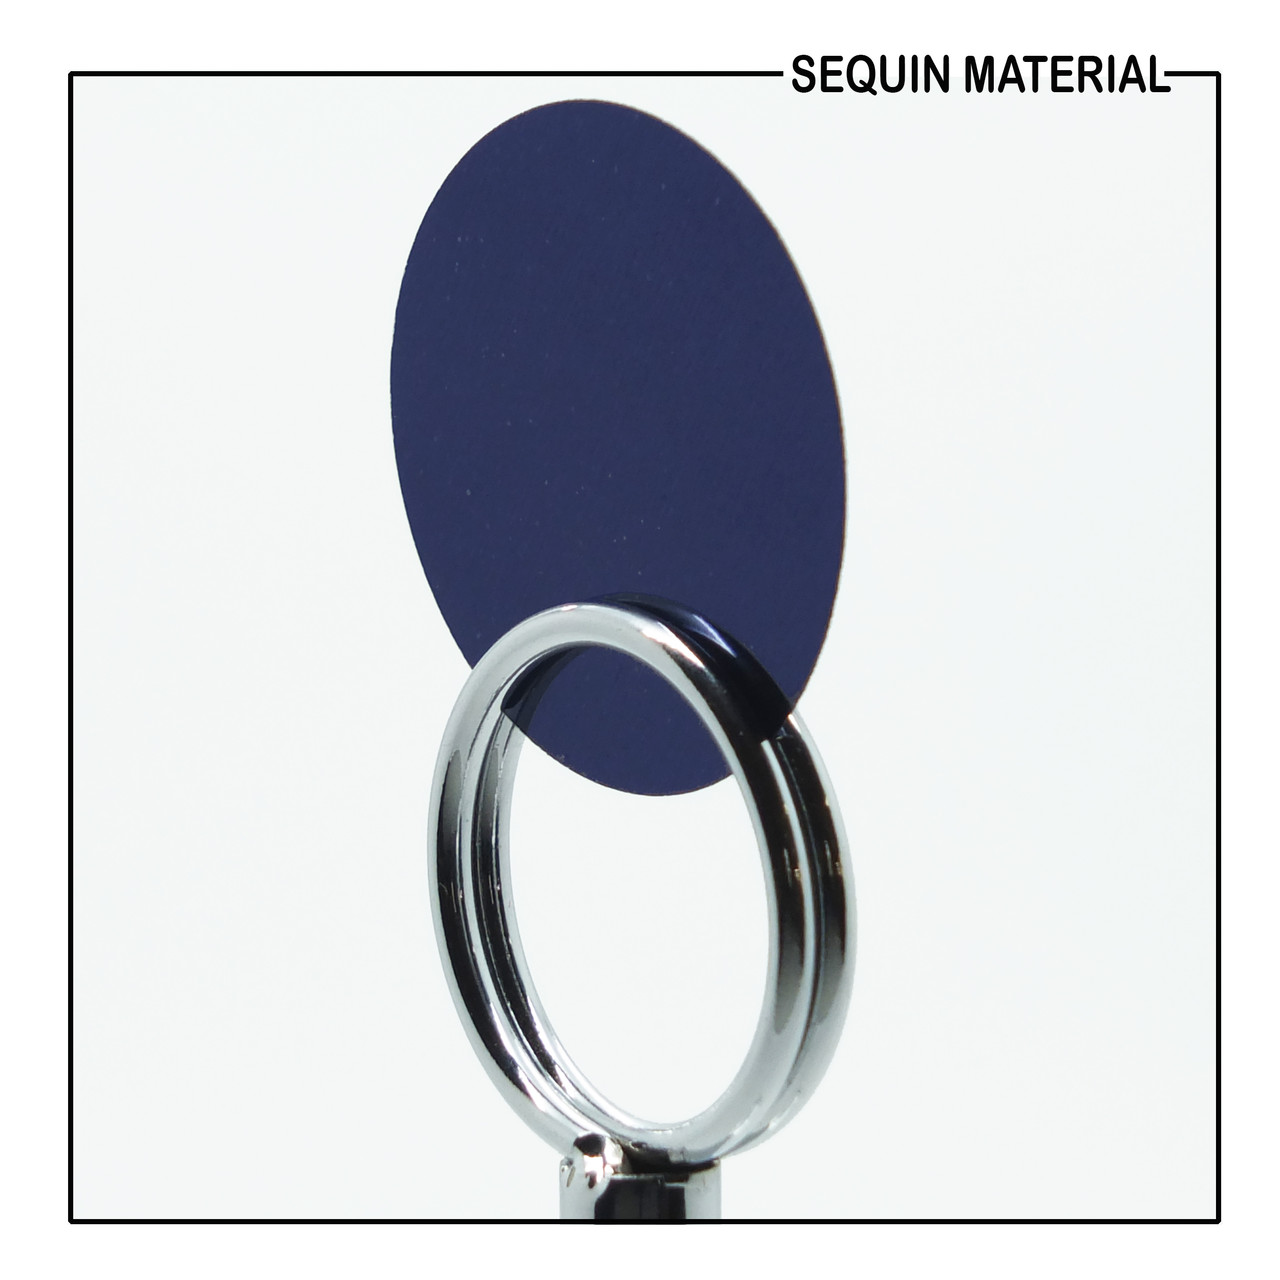 SequinsUSA Navy Blue Shiny Metallic Sequin Material RK018